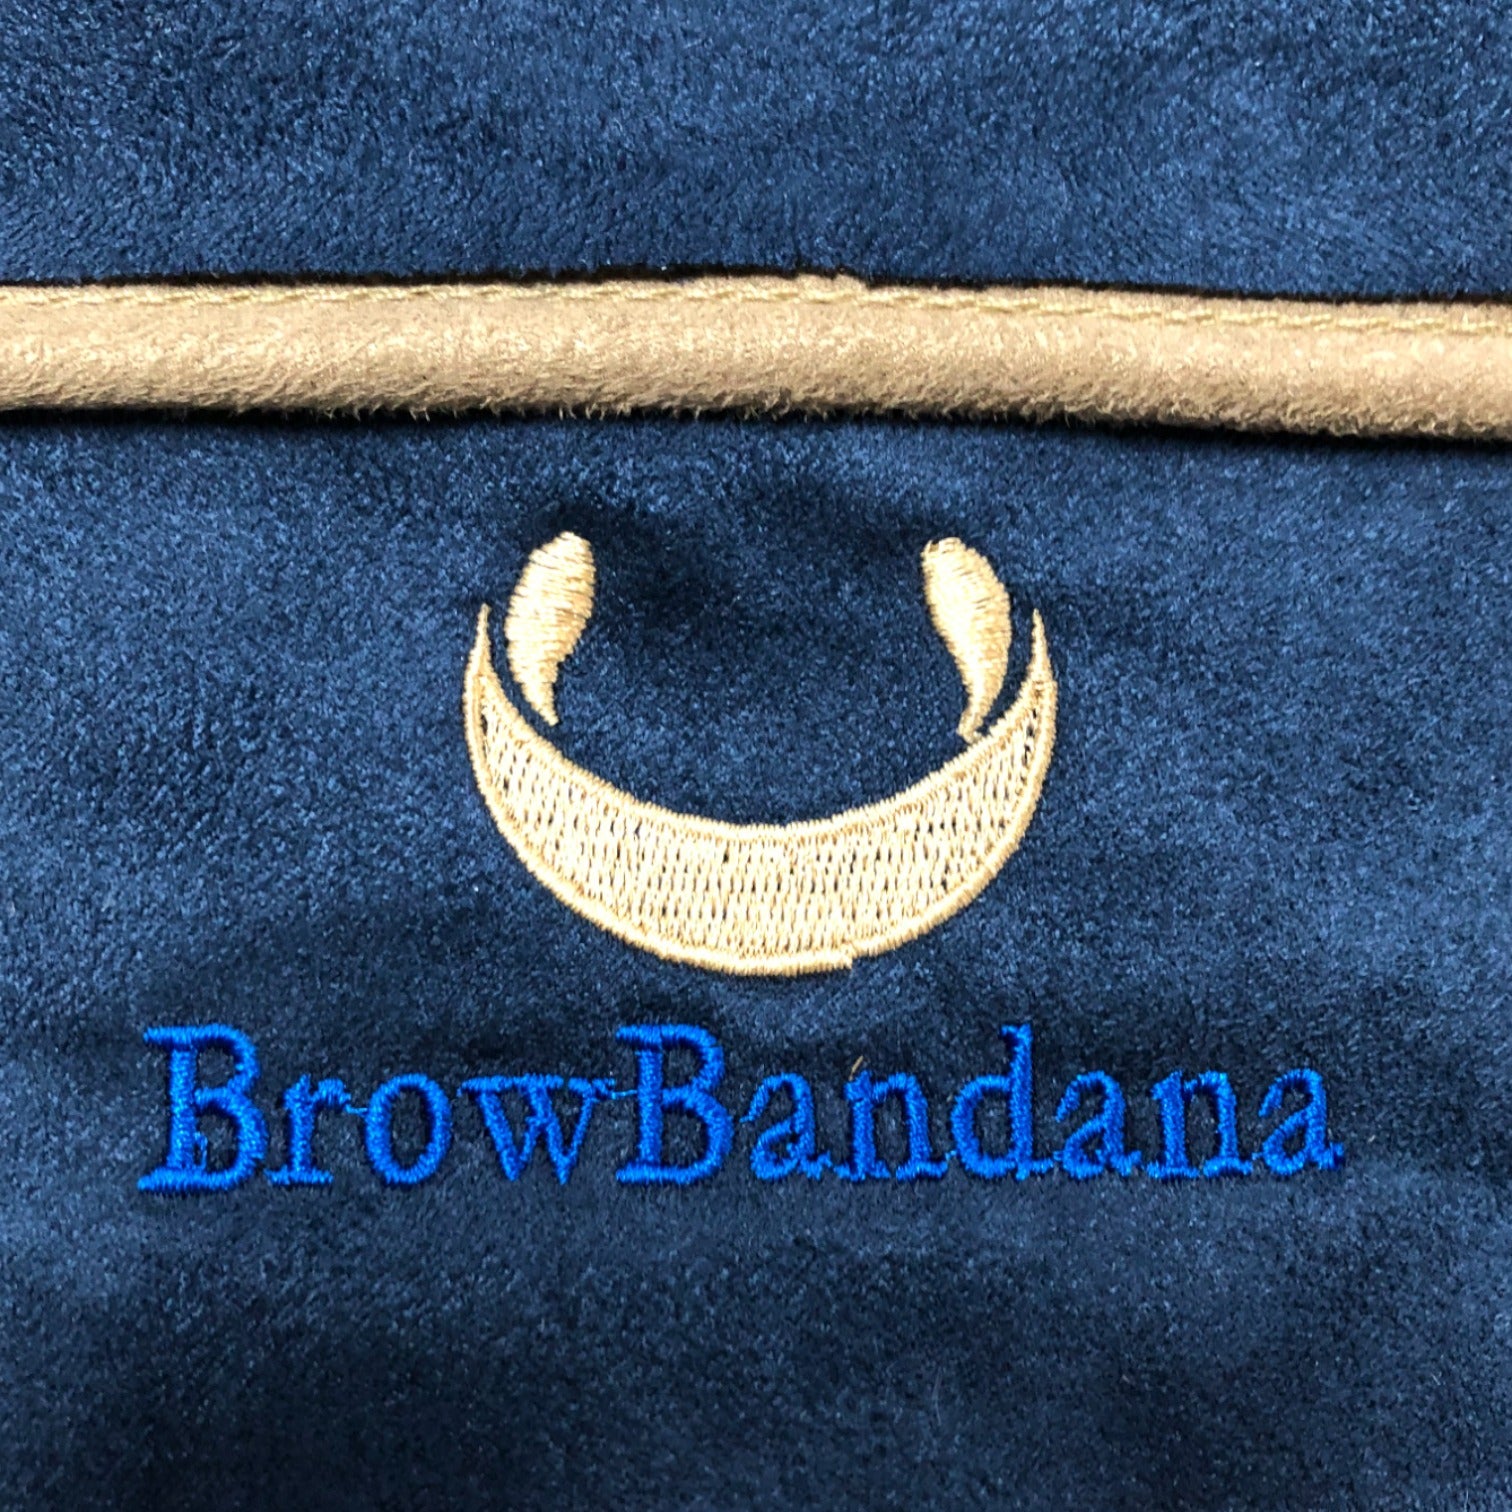 BrowBandana Signature in DARK BLUE